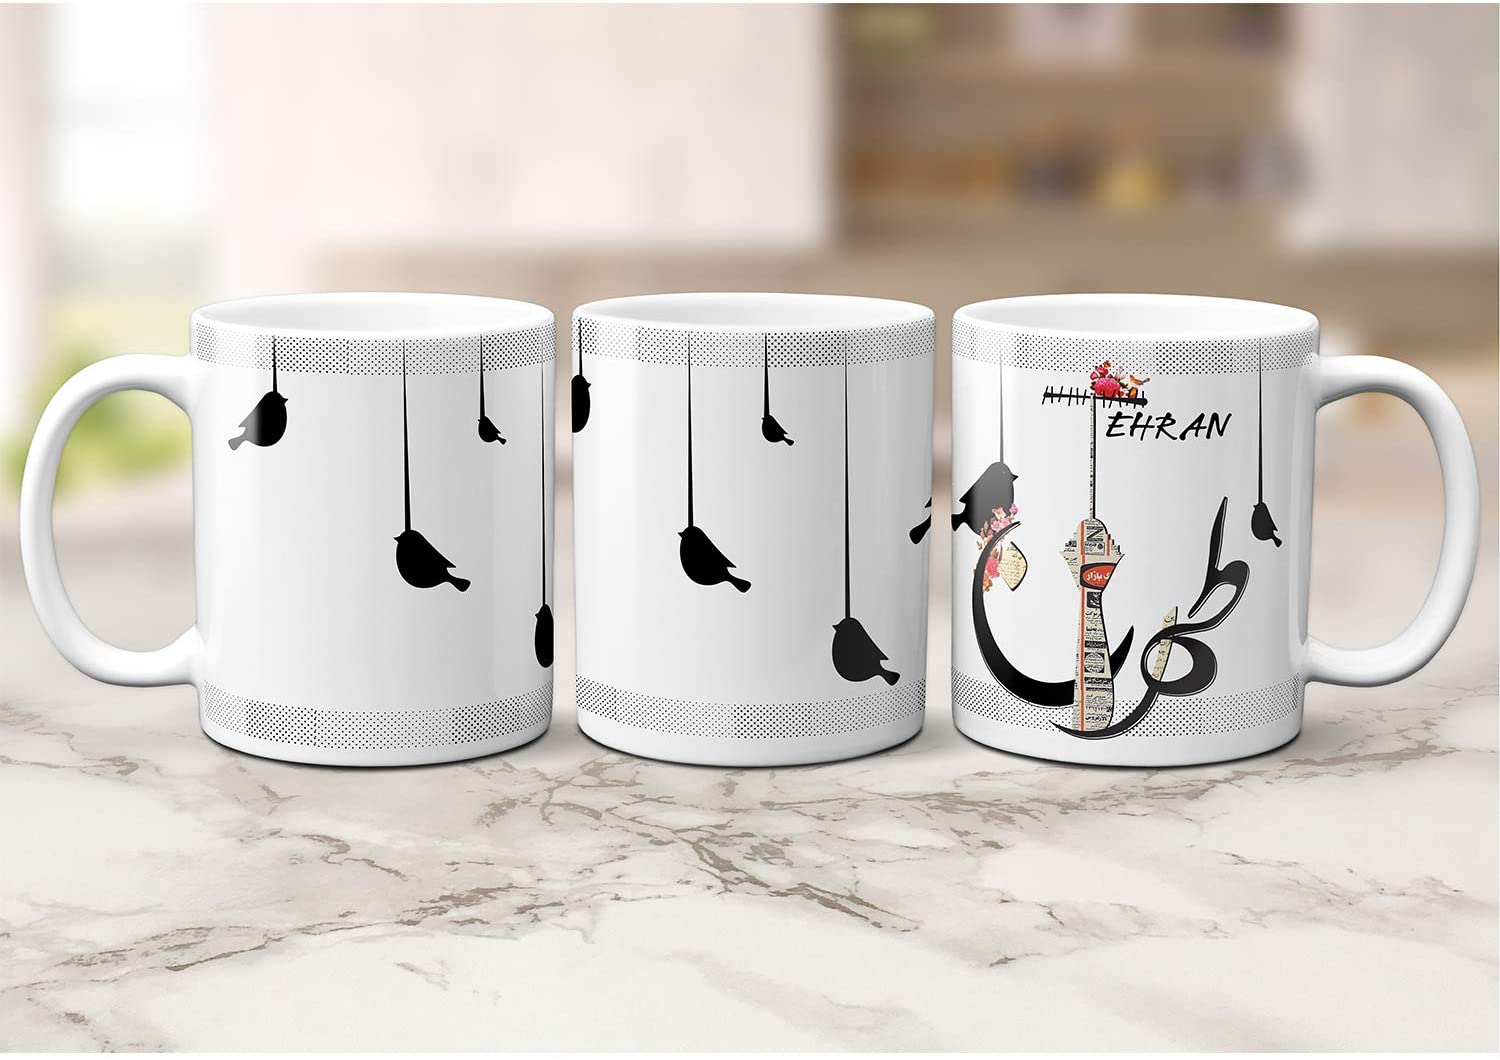 History of using mugs or ceramic cups